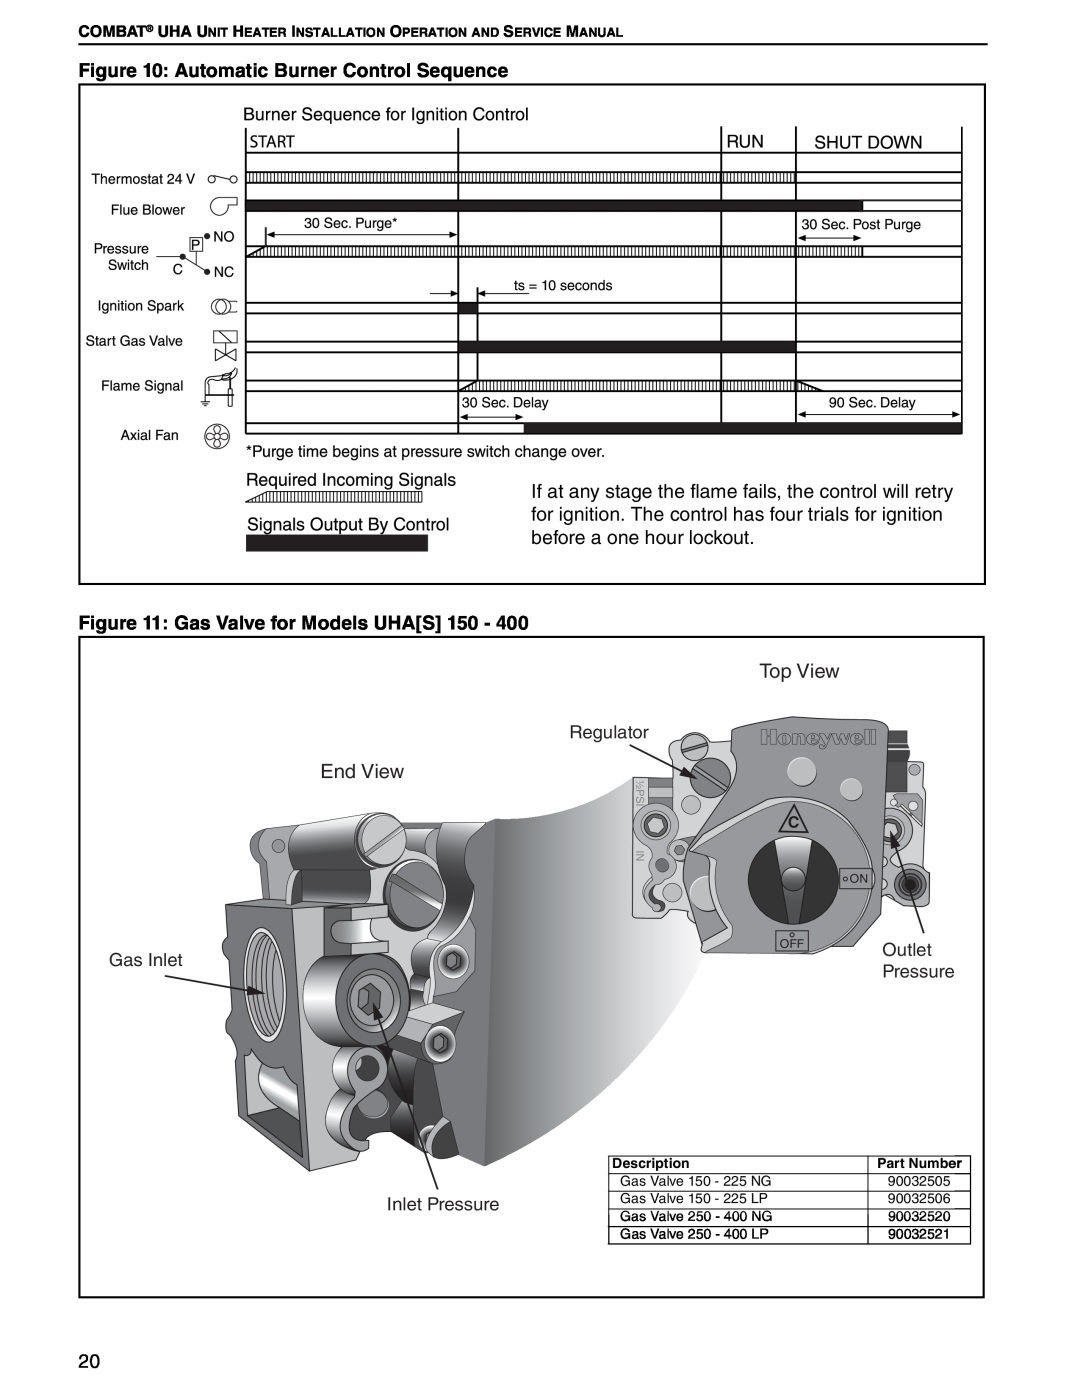 Roberts Gorden 175 Automatic Burner Control Sequence, Gas Valve for Models UHAS, Regulator, Gas Inlet, Outlet, Part Number 